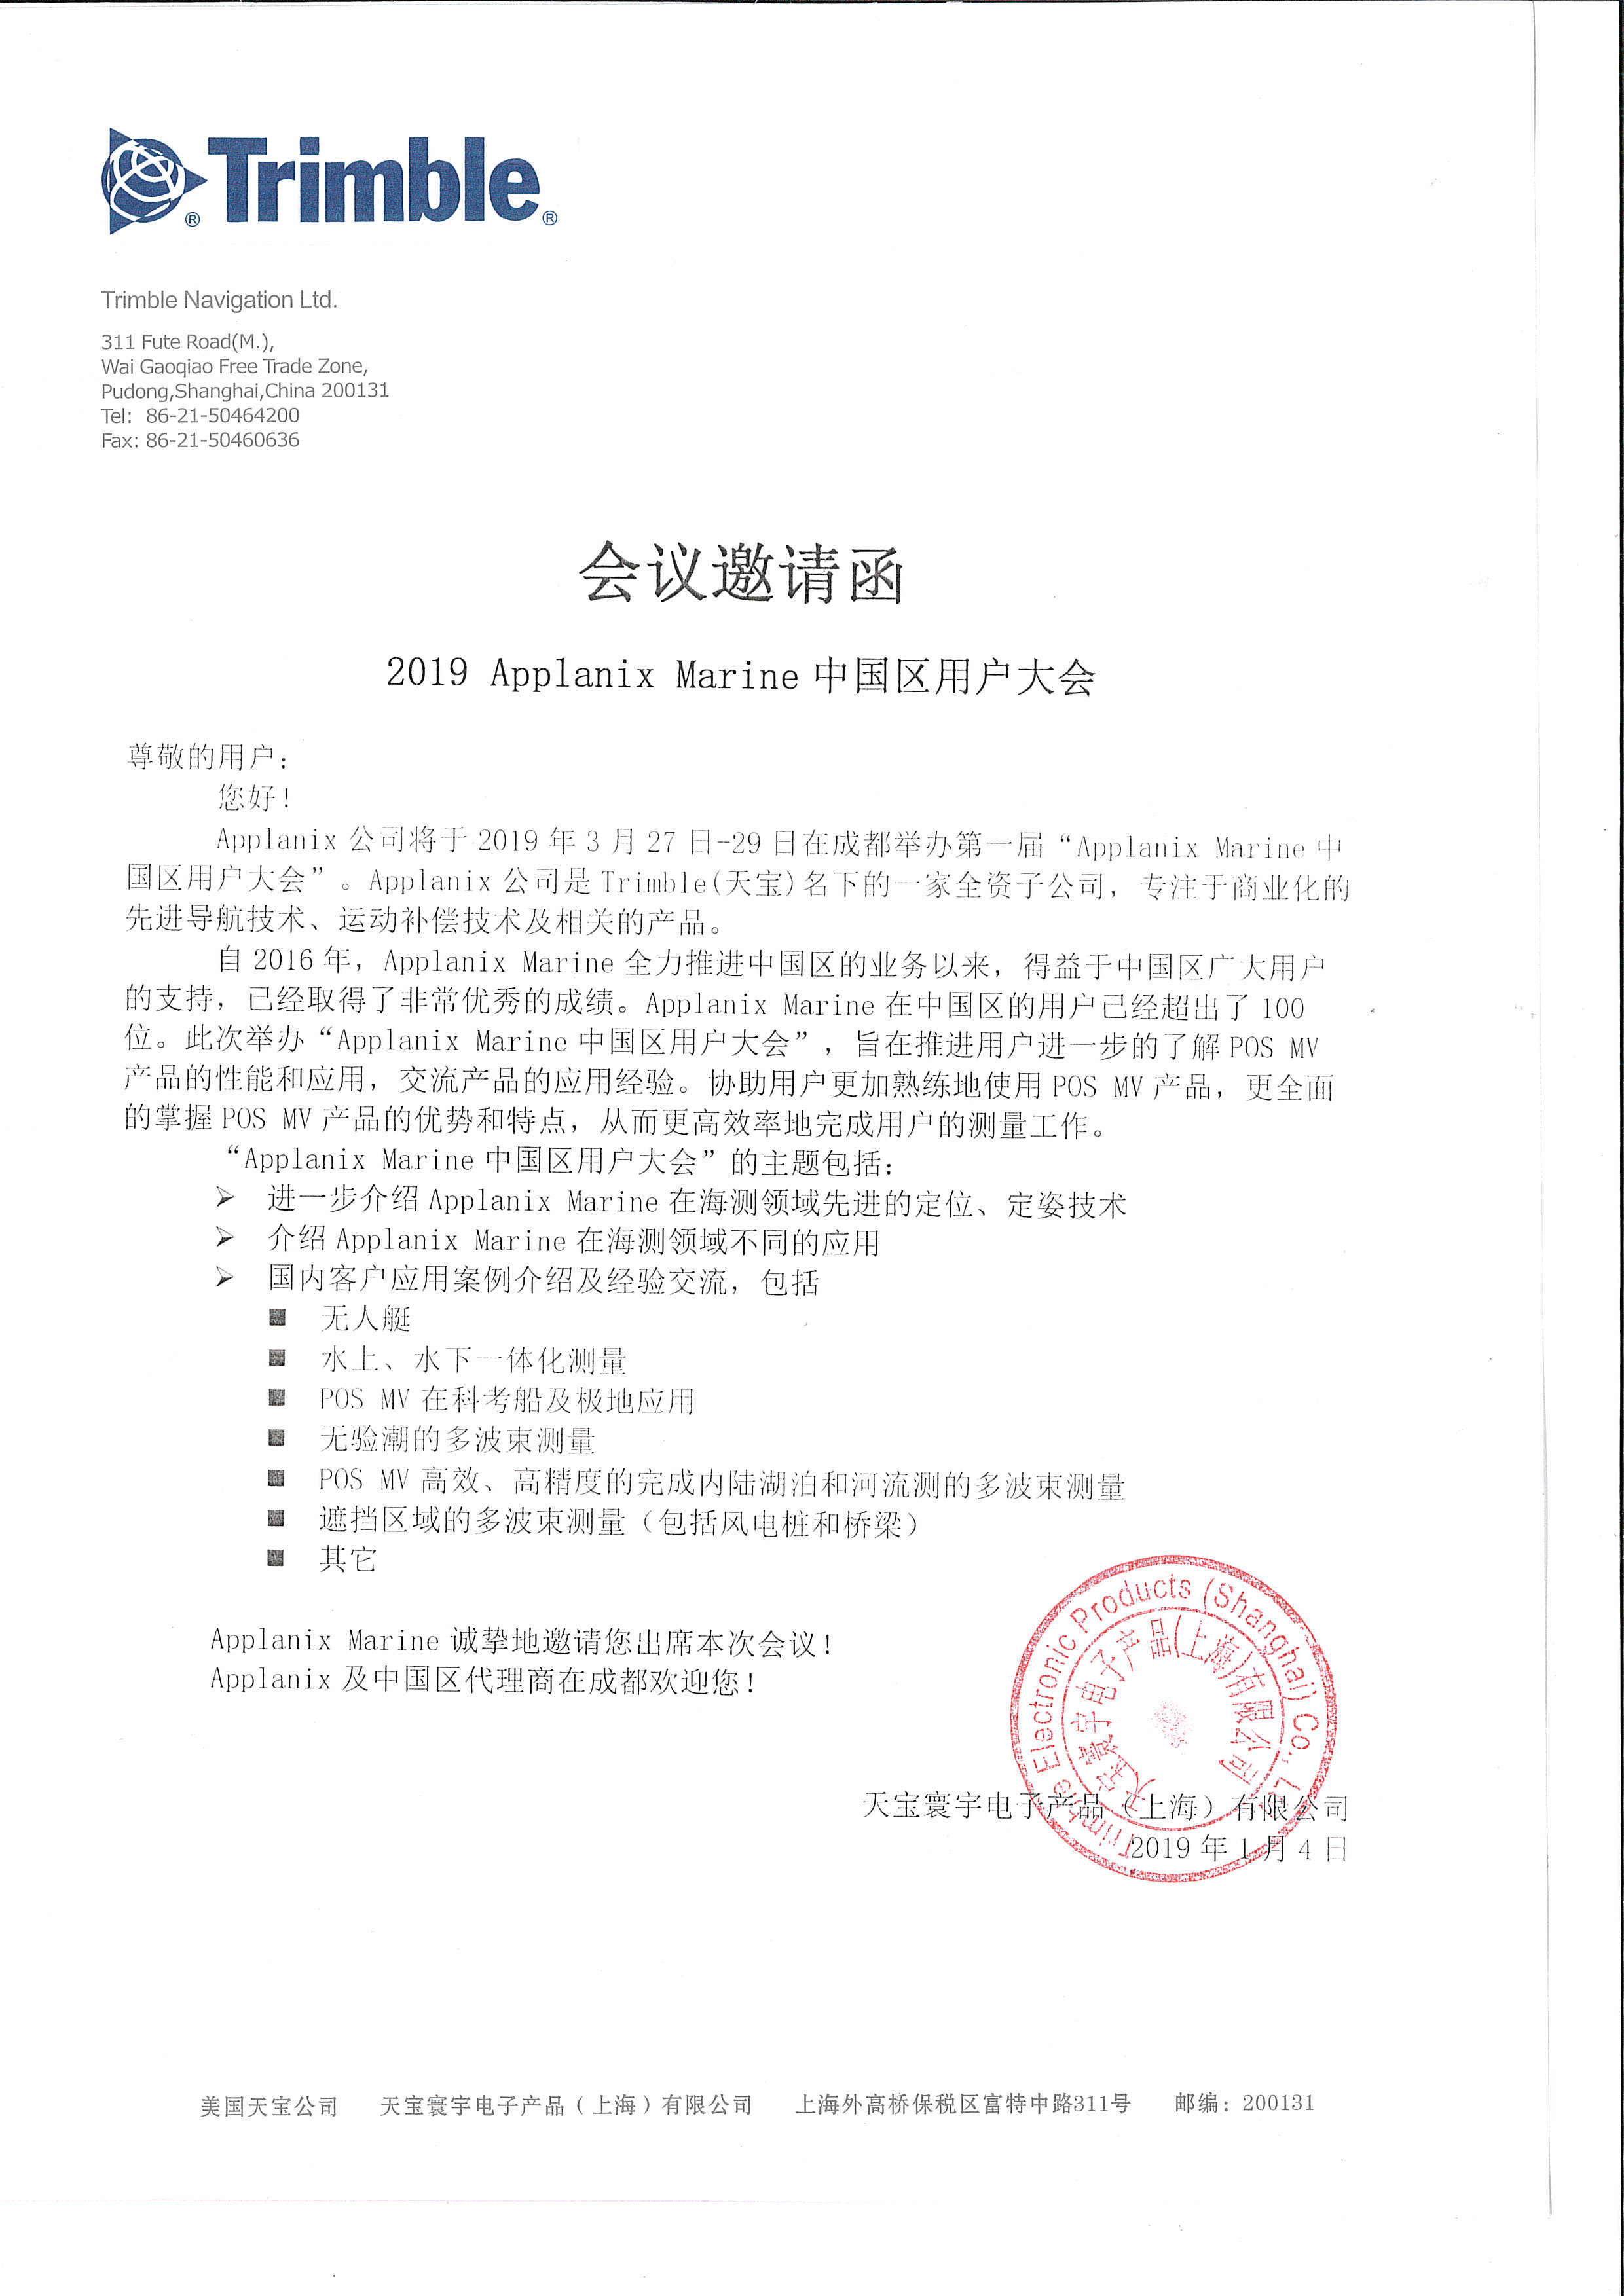 2019 Applanix Marine中国区用户大会邀请函-扫描件.jpg